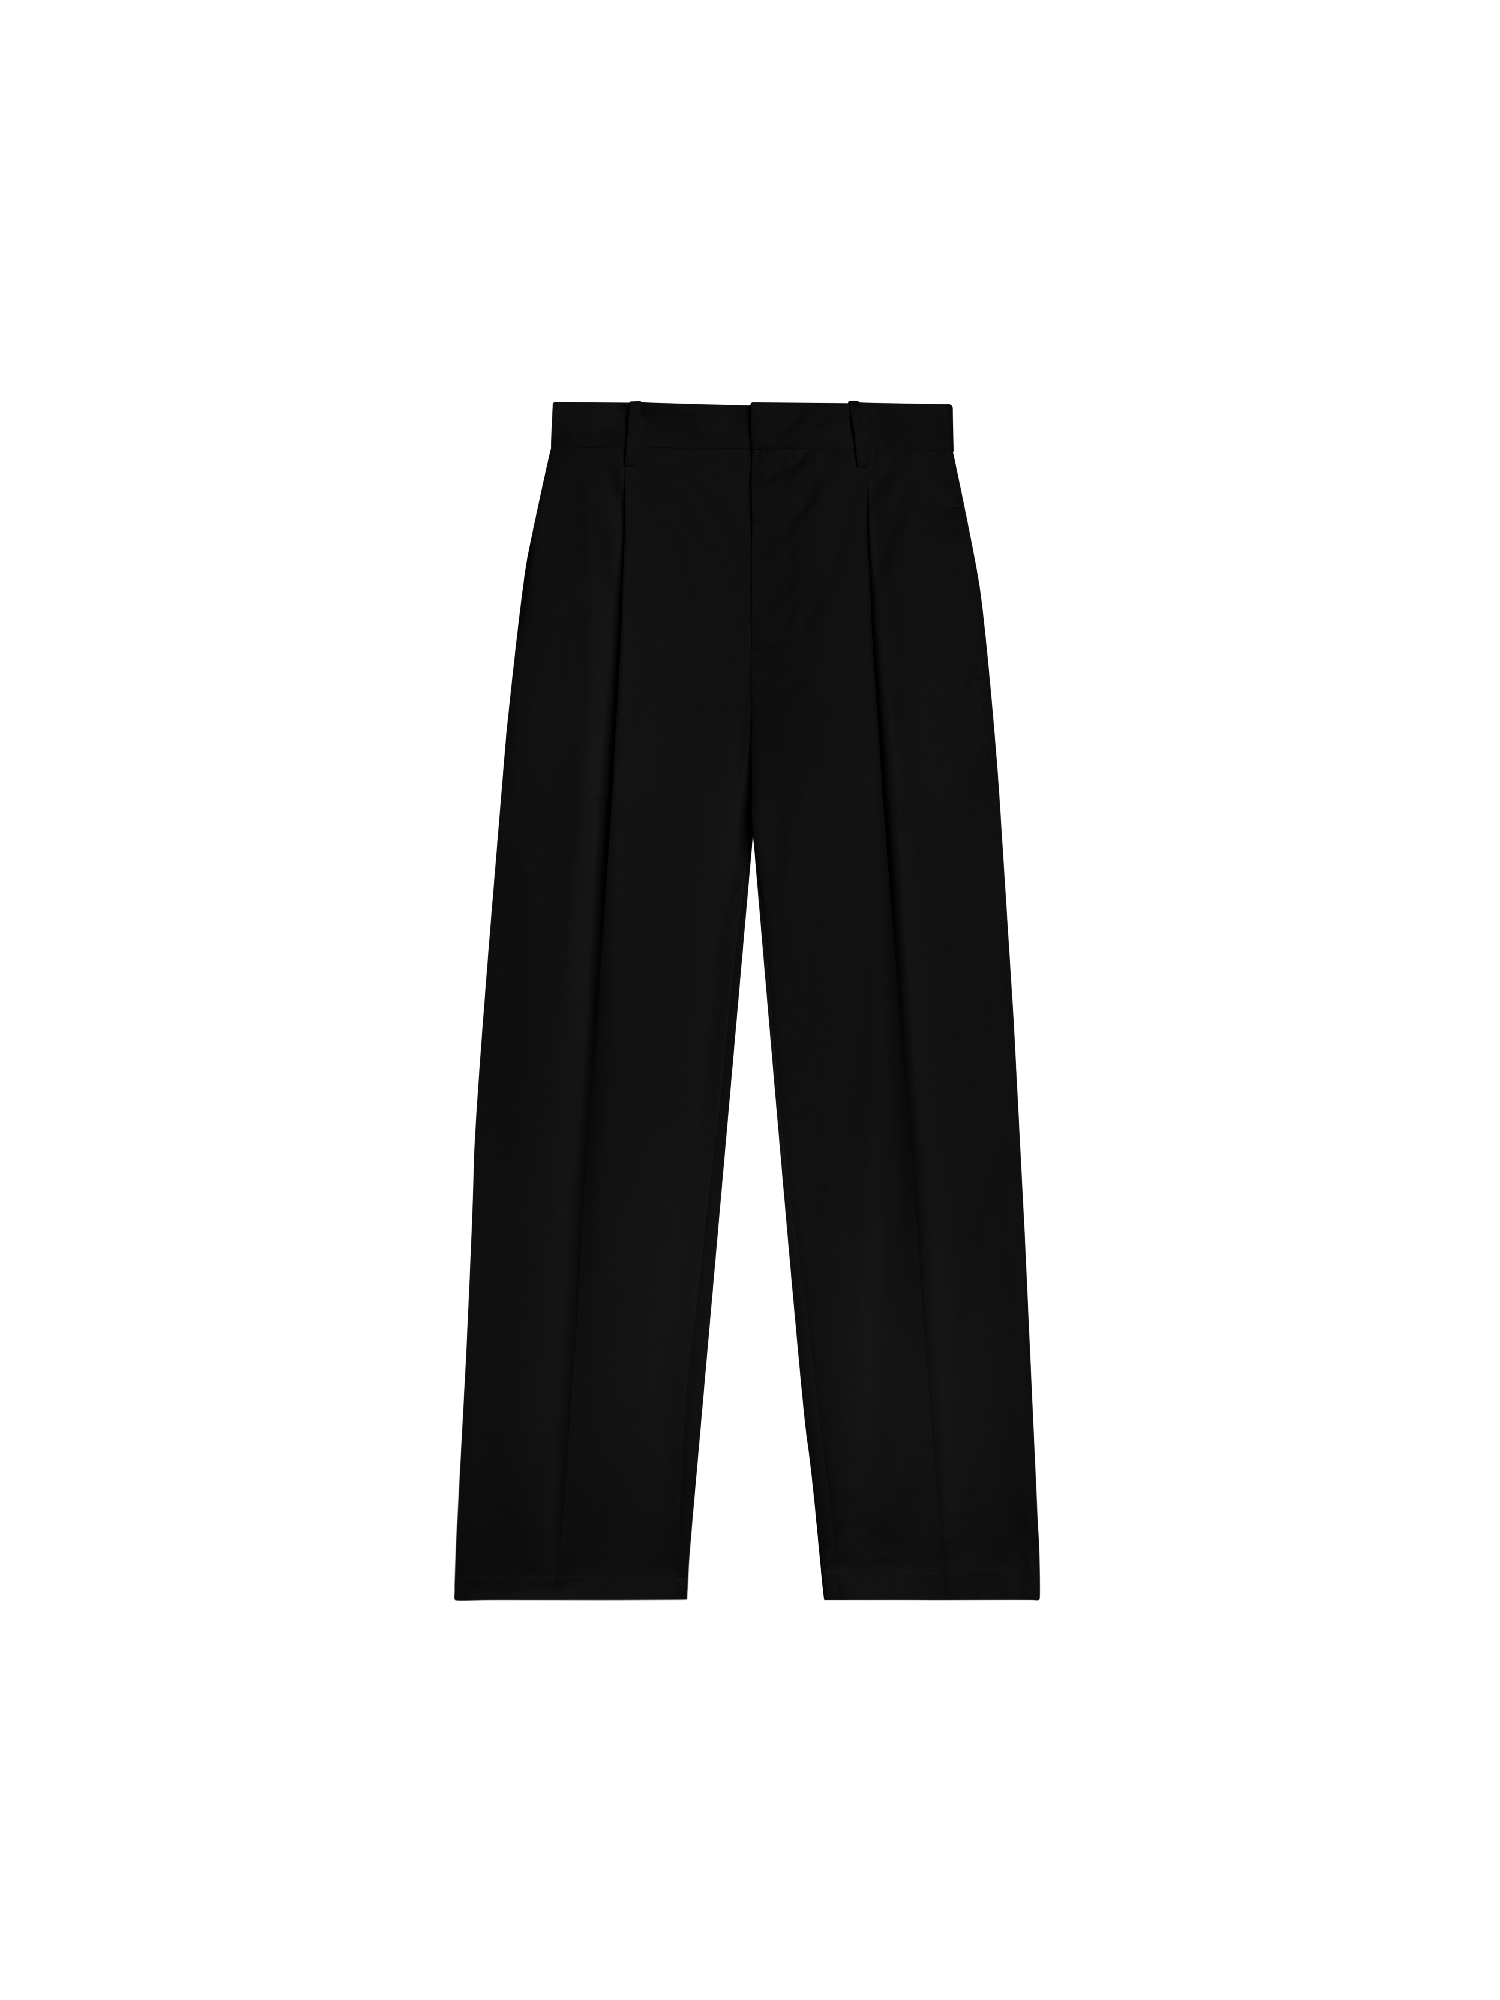 Men's Cotton Tailored Trousers—black